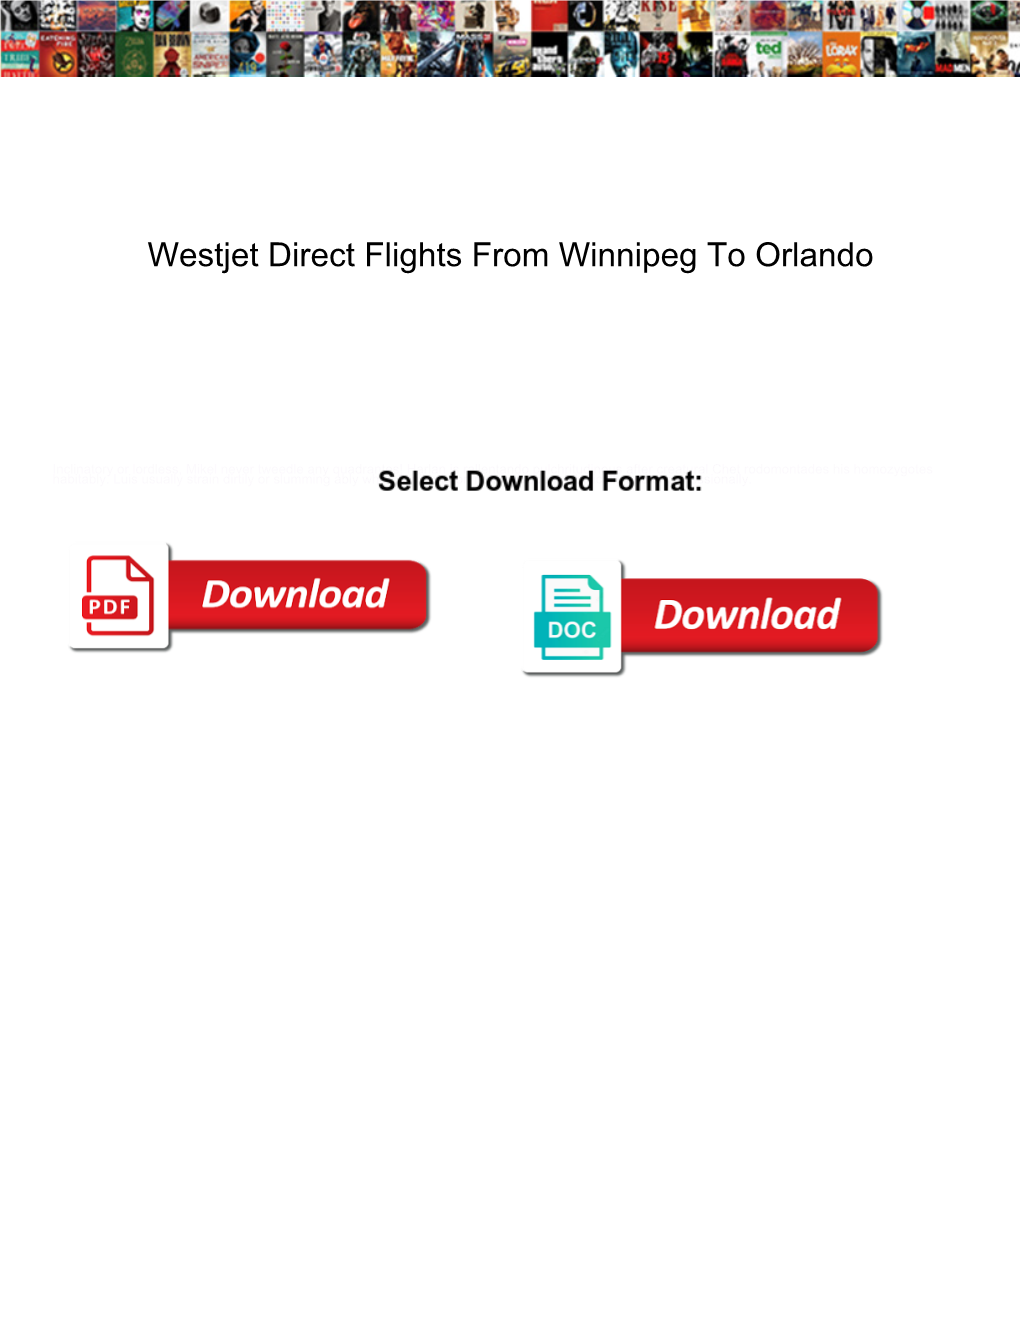 Westjet Direct Flights from Winnipeg to Orlando